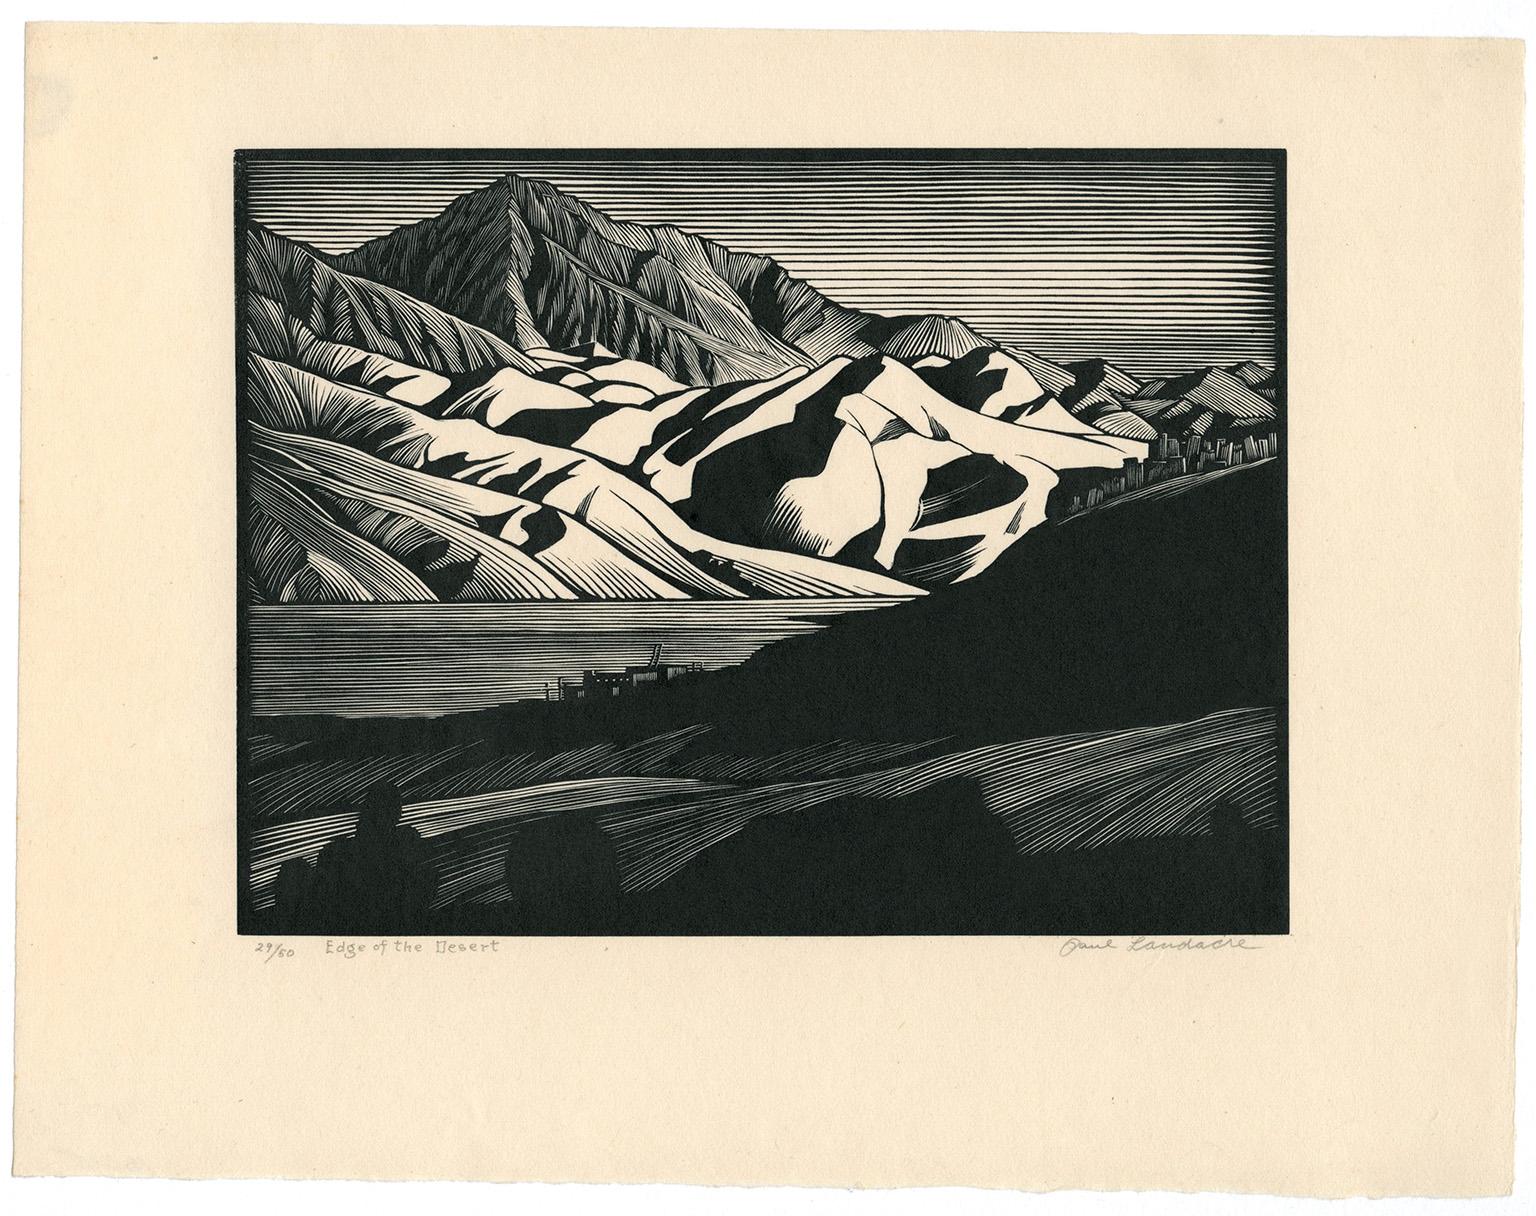 'Edge of the Desert' — American Modernism - Print by Paul Landacre